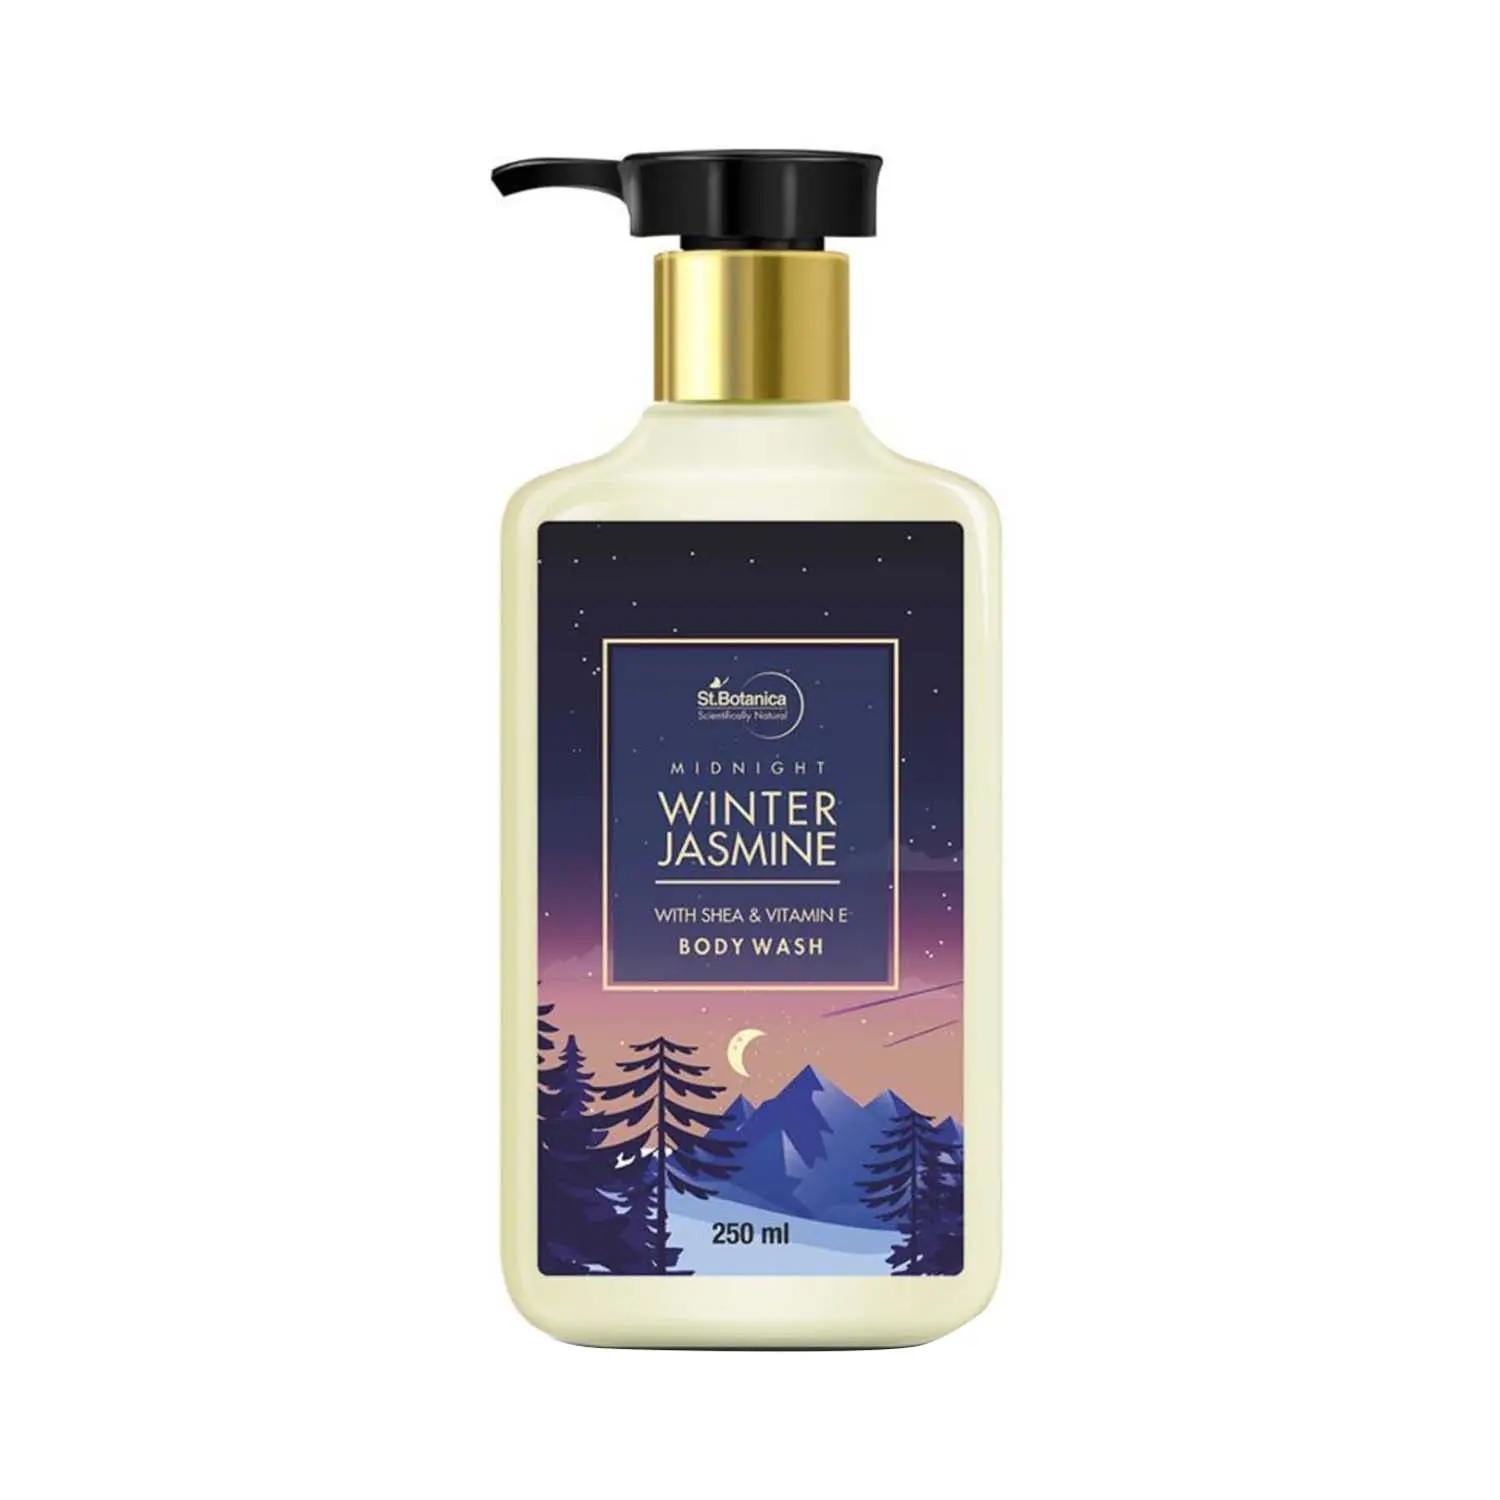 St.Botanica Midnight Winter Jasmine Body Wash (250ml)